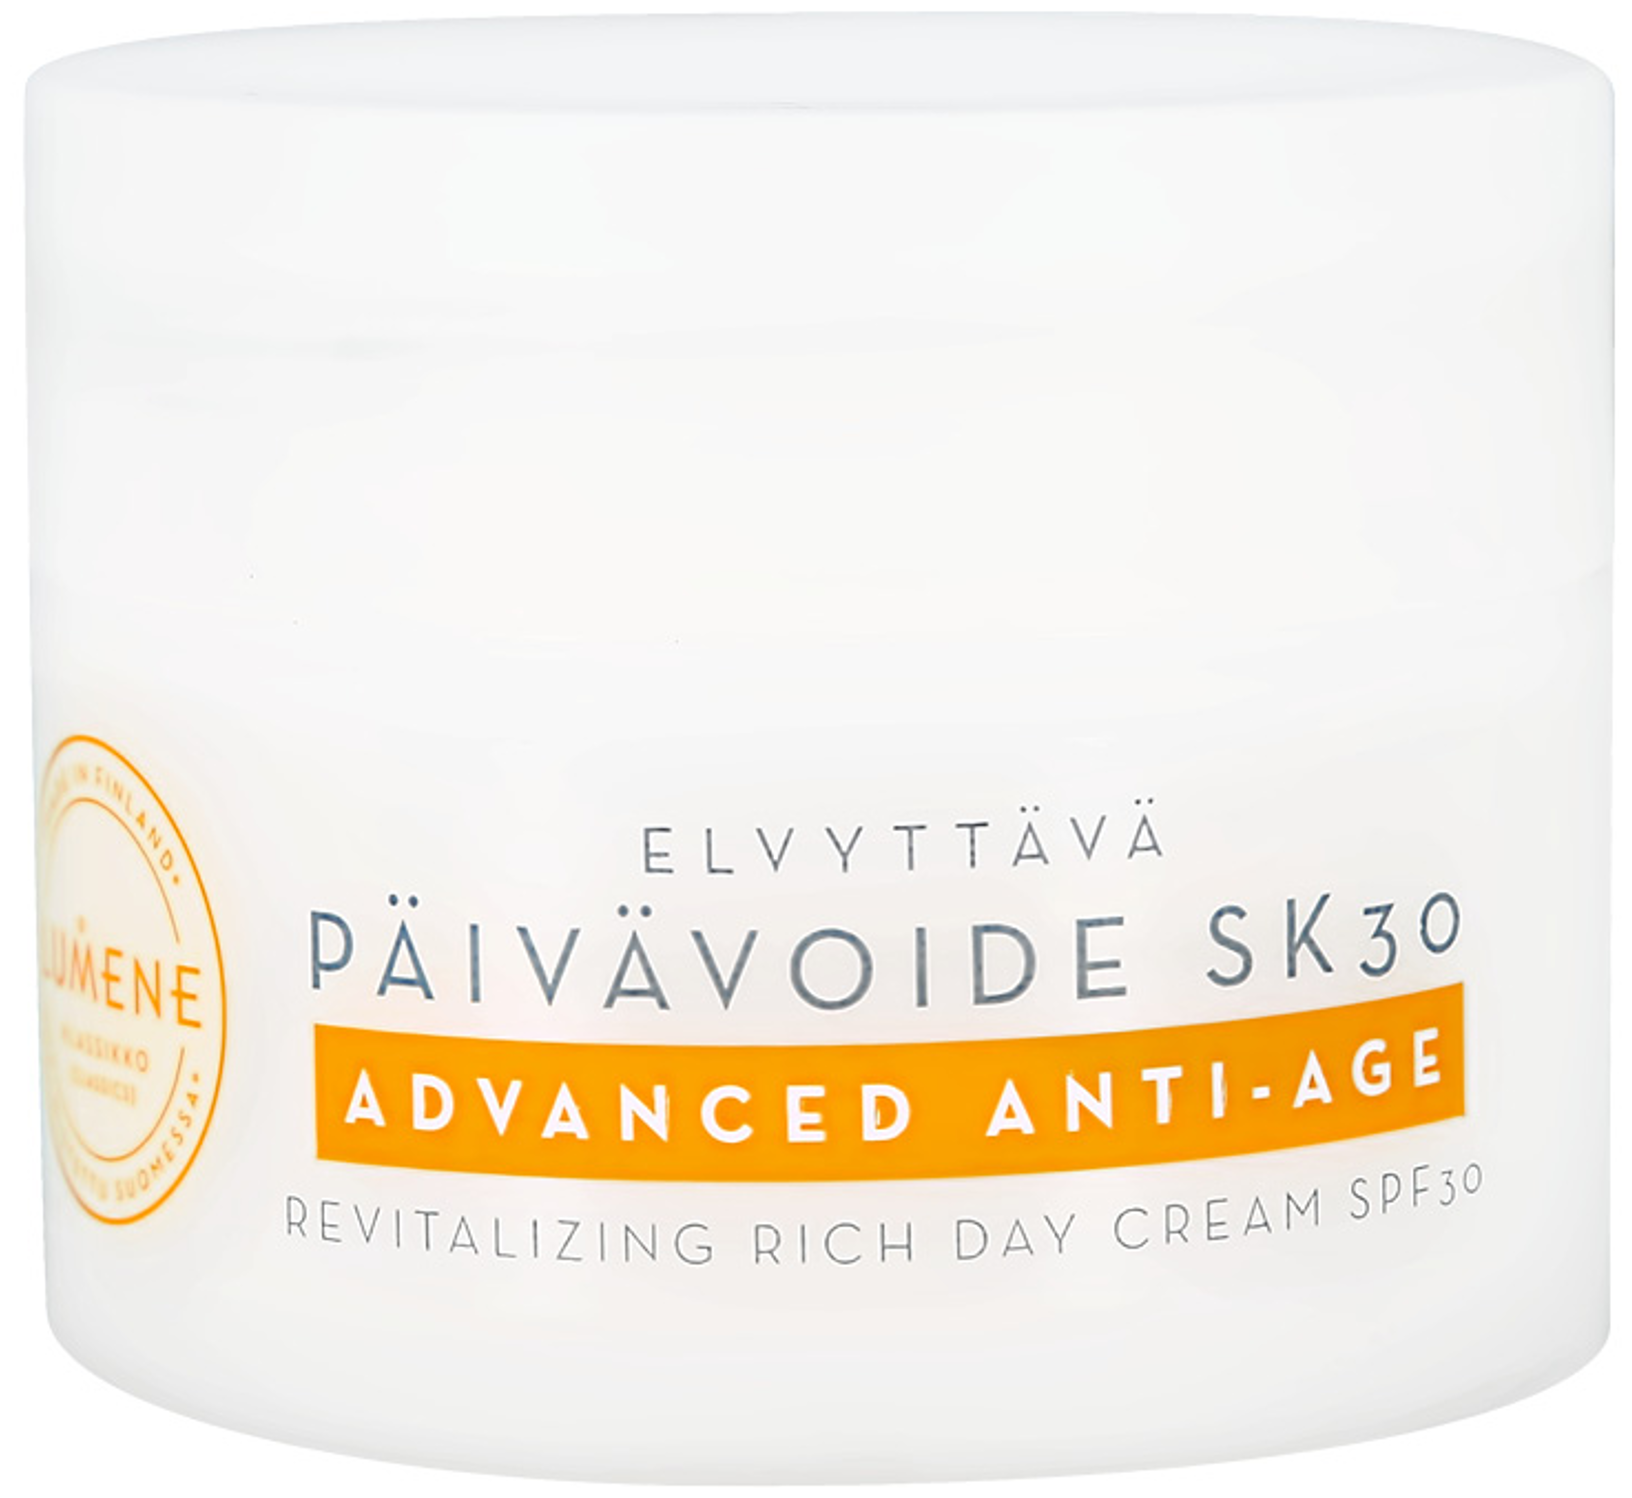 Lumene klassiko anti age 50+ SK30 дневной антивозрастной ухаживающий крем, 50 мл (из Финляндии)